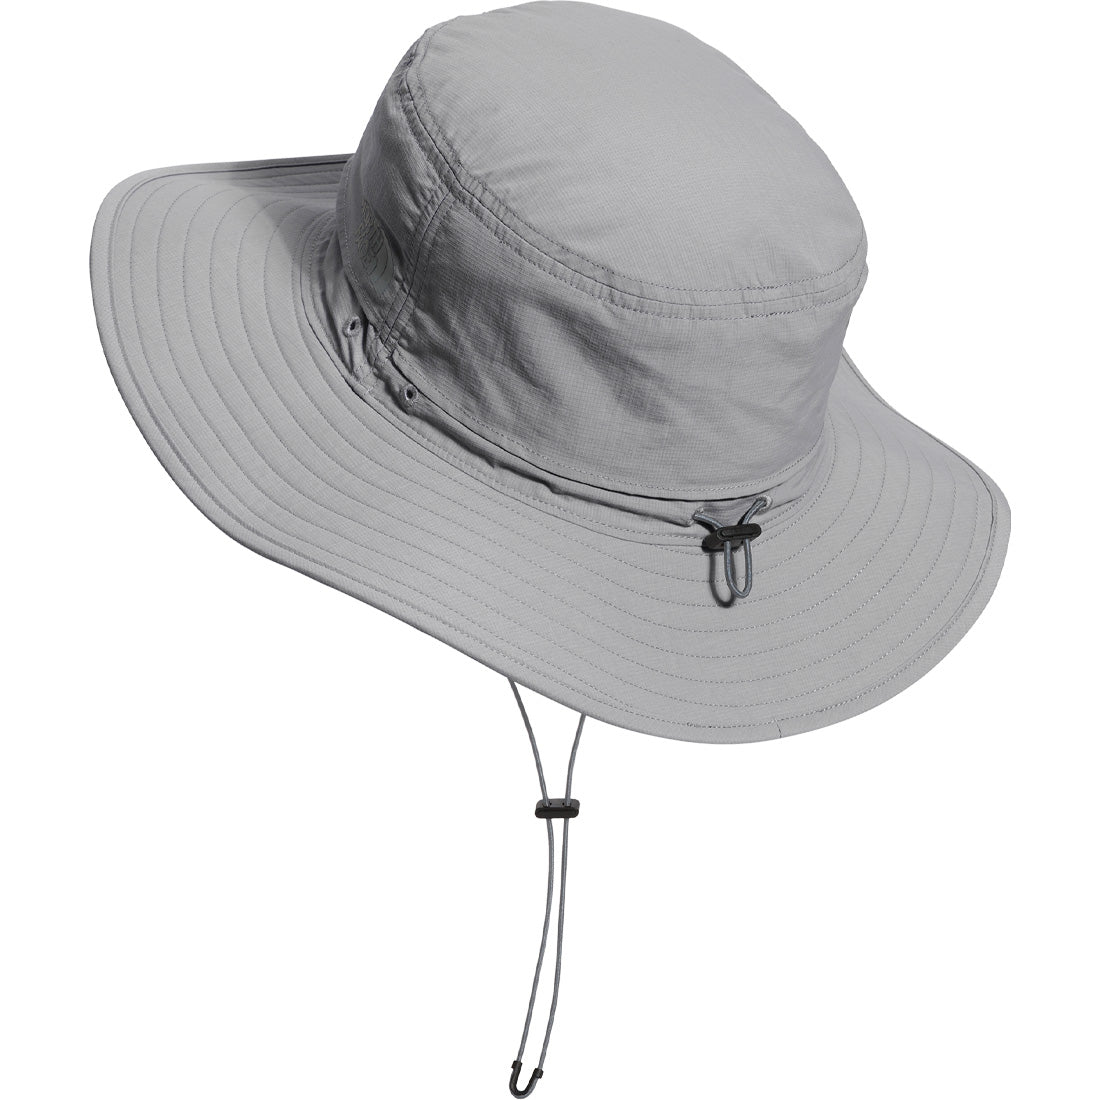 The North Face Horizon Breeze Brimmer Hat - Men's